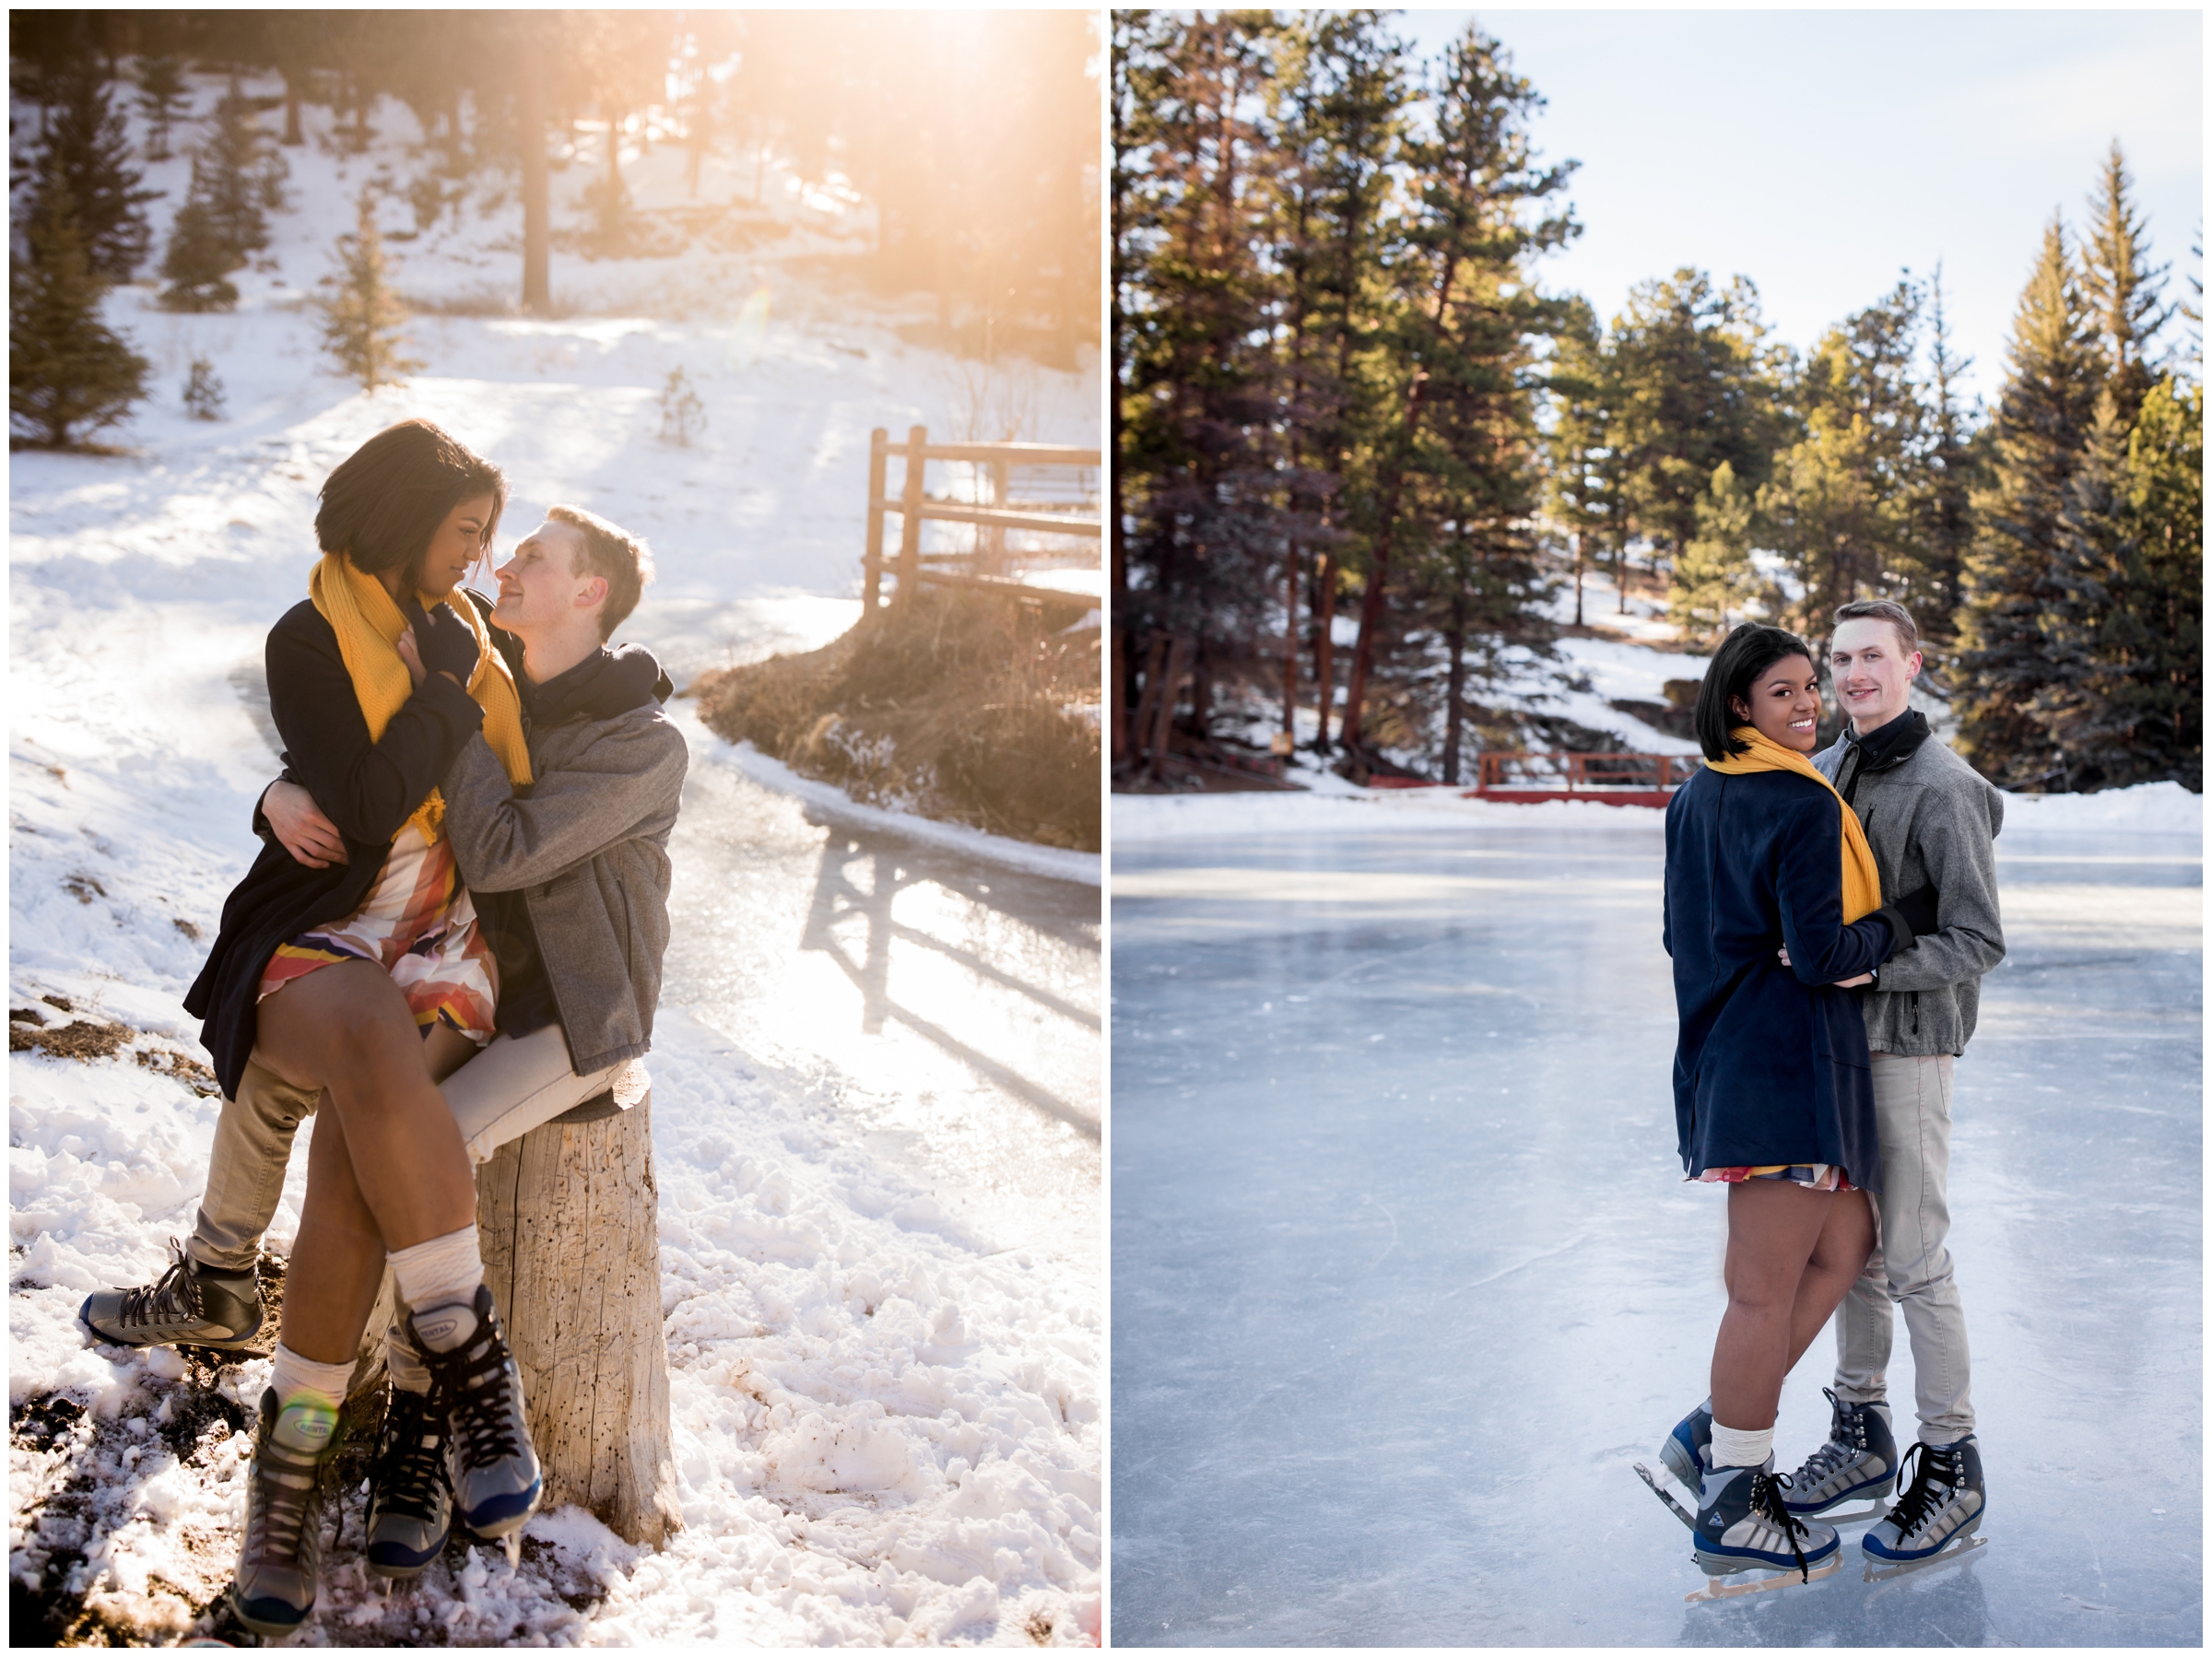 ice skating Estes Park Colorado engagement photography inspiration